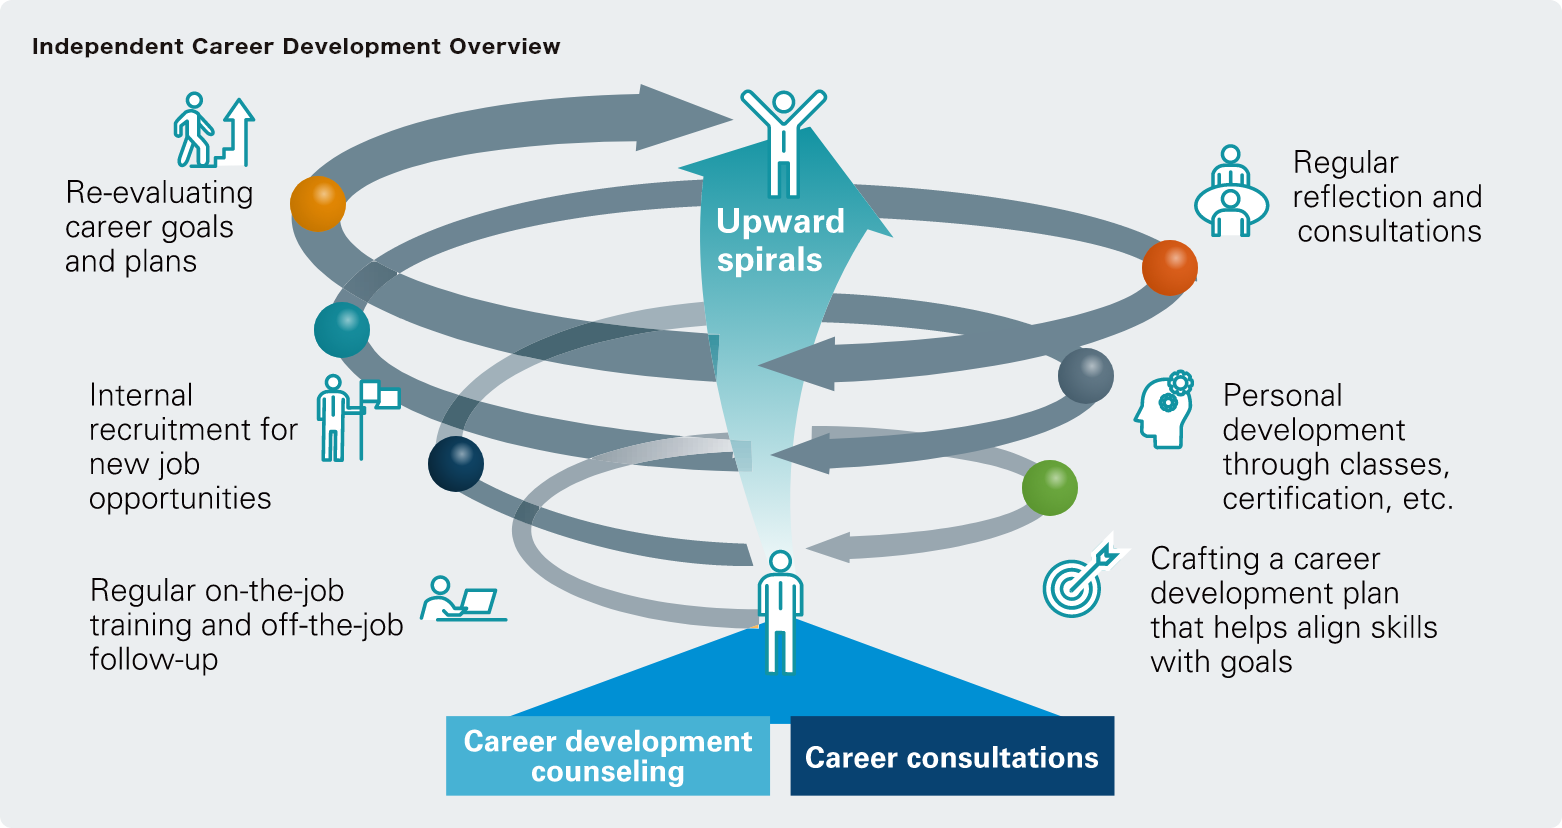 Independent Career Development Overview